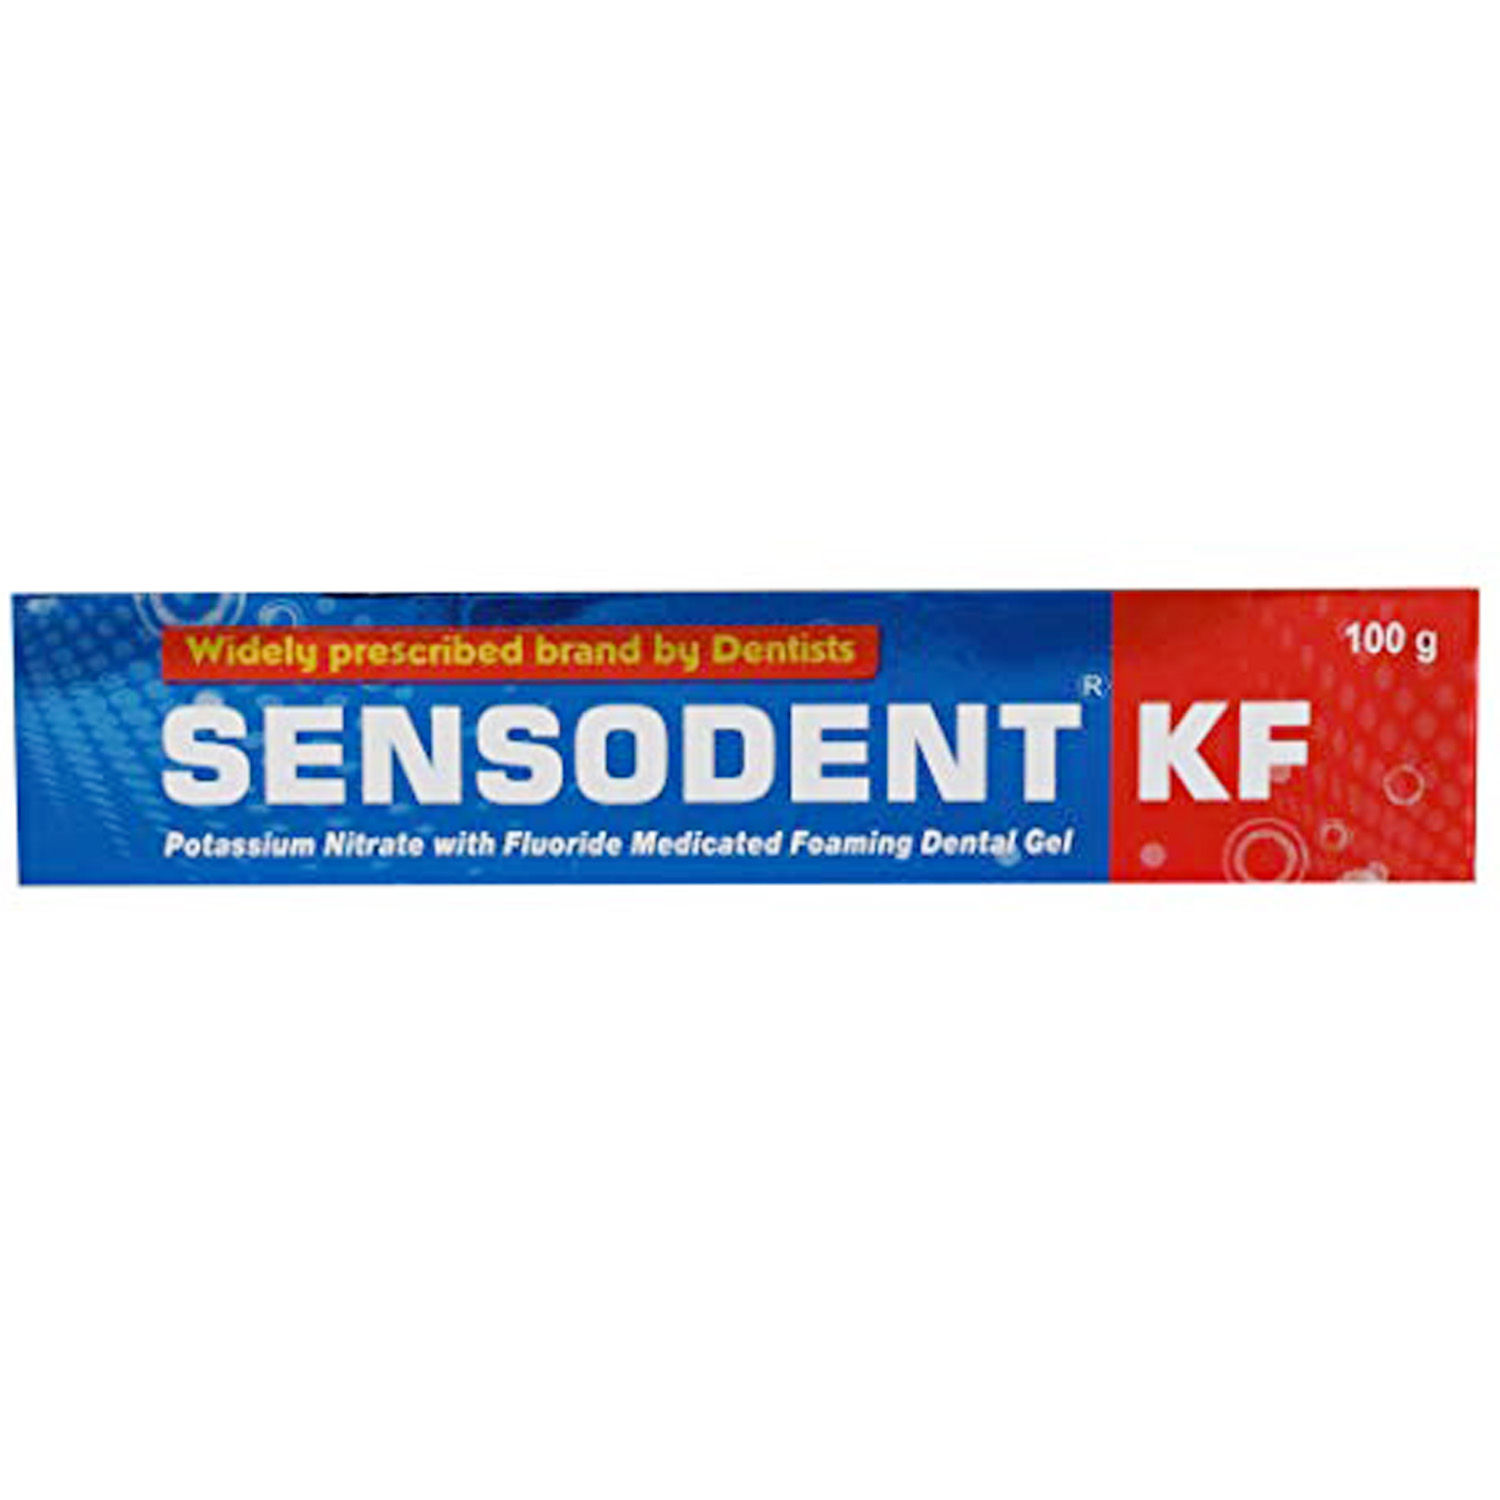 Buy Sensodent KF Medicated Foaming Dental Gel, 100 gm Online